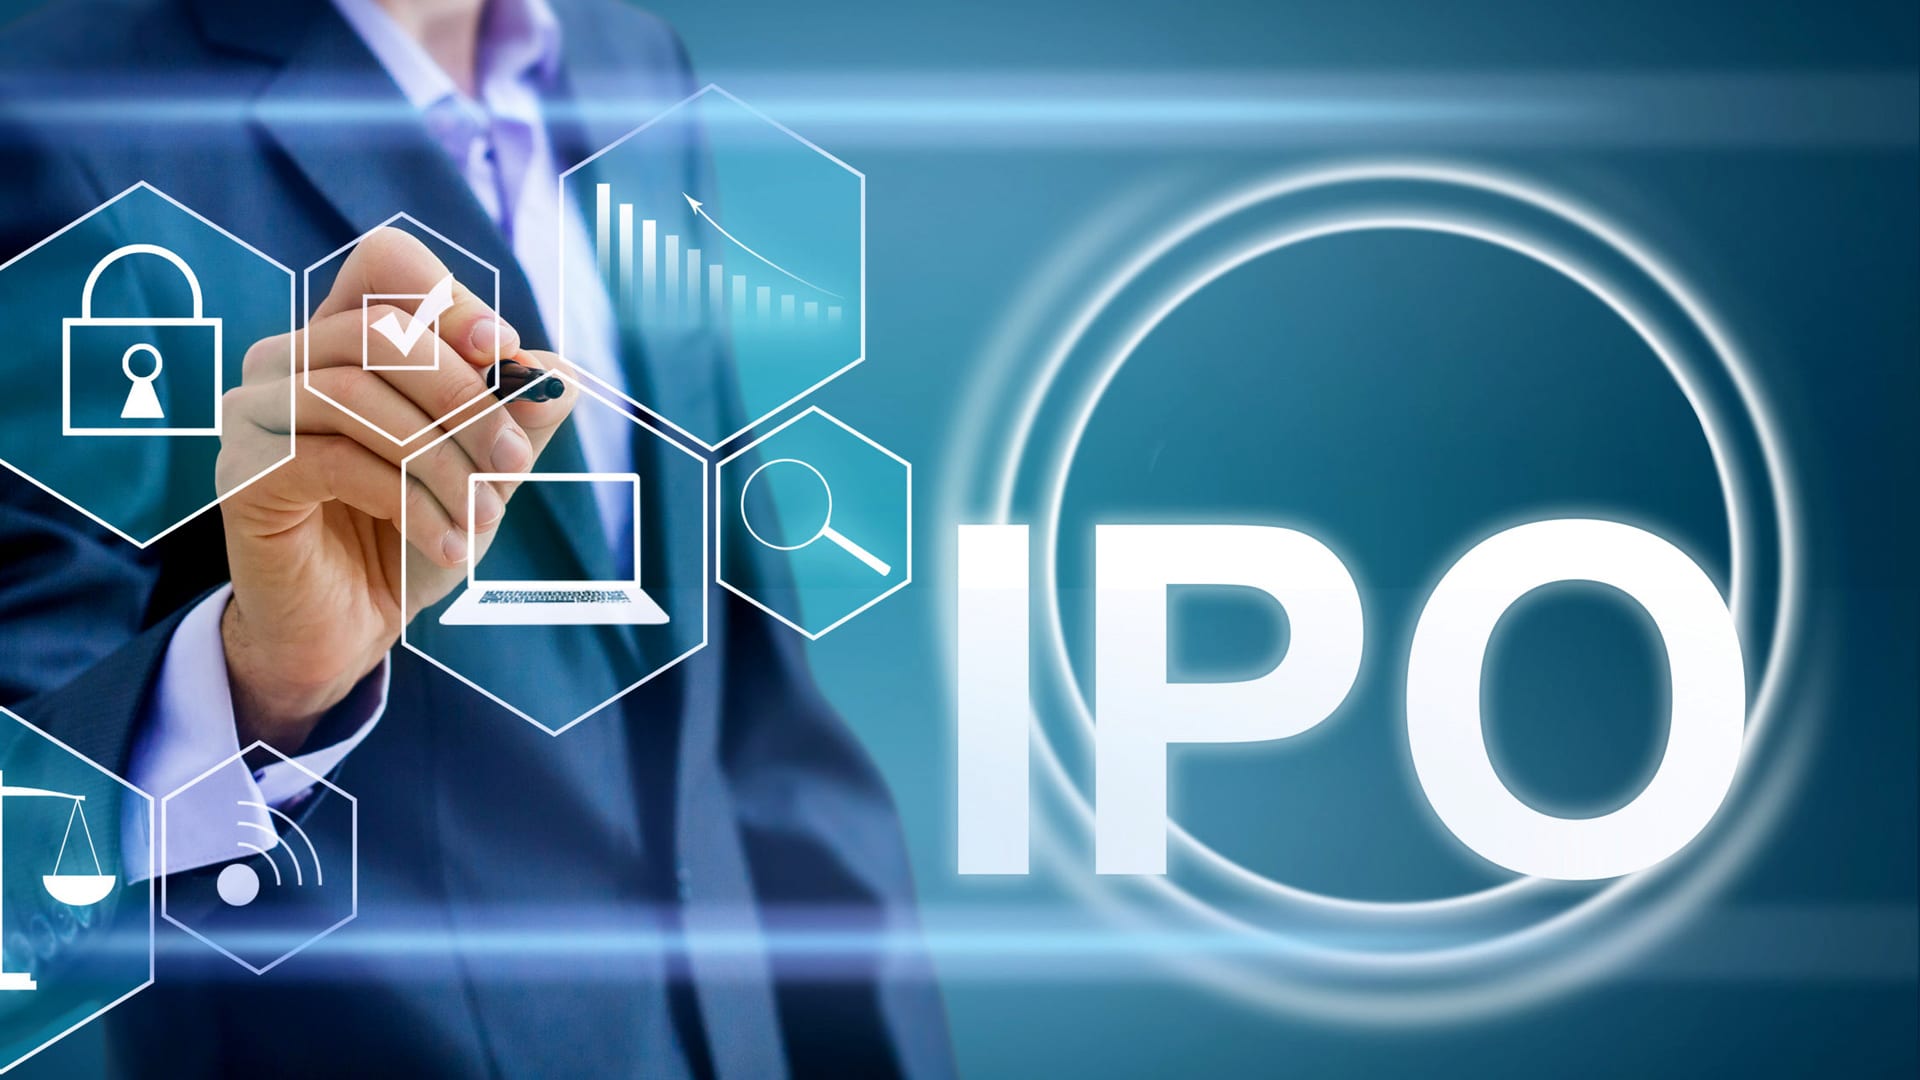 Synoptics Technologies IPO to open on Jun 30, list on NSE Emerge